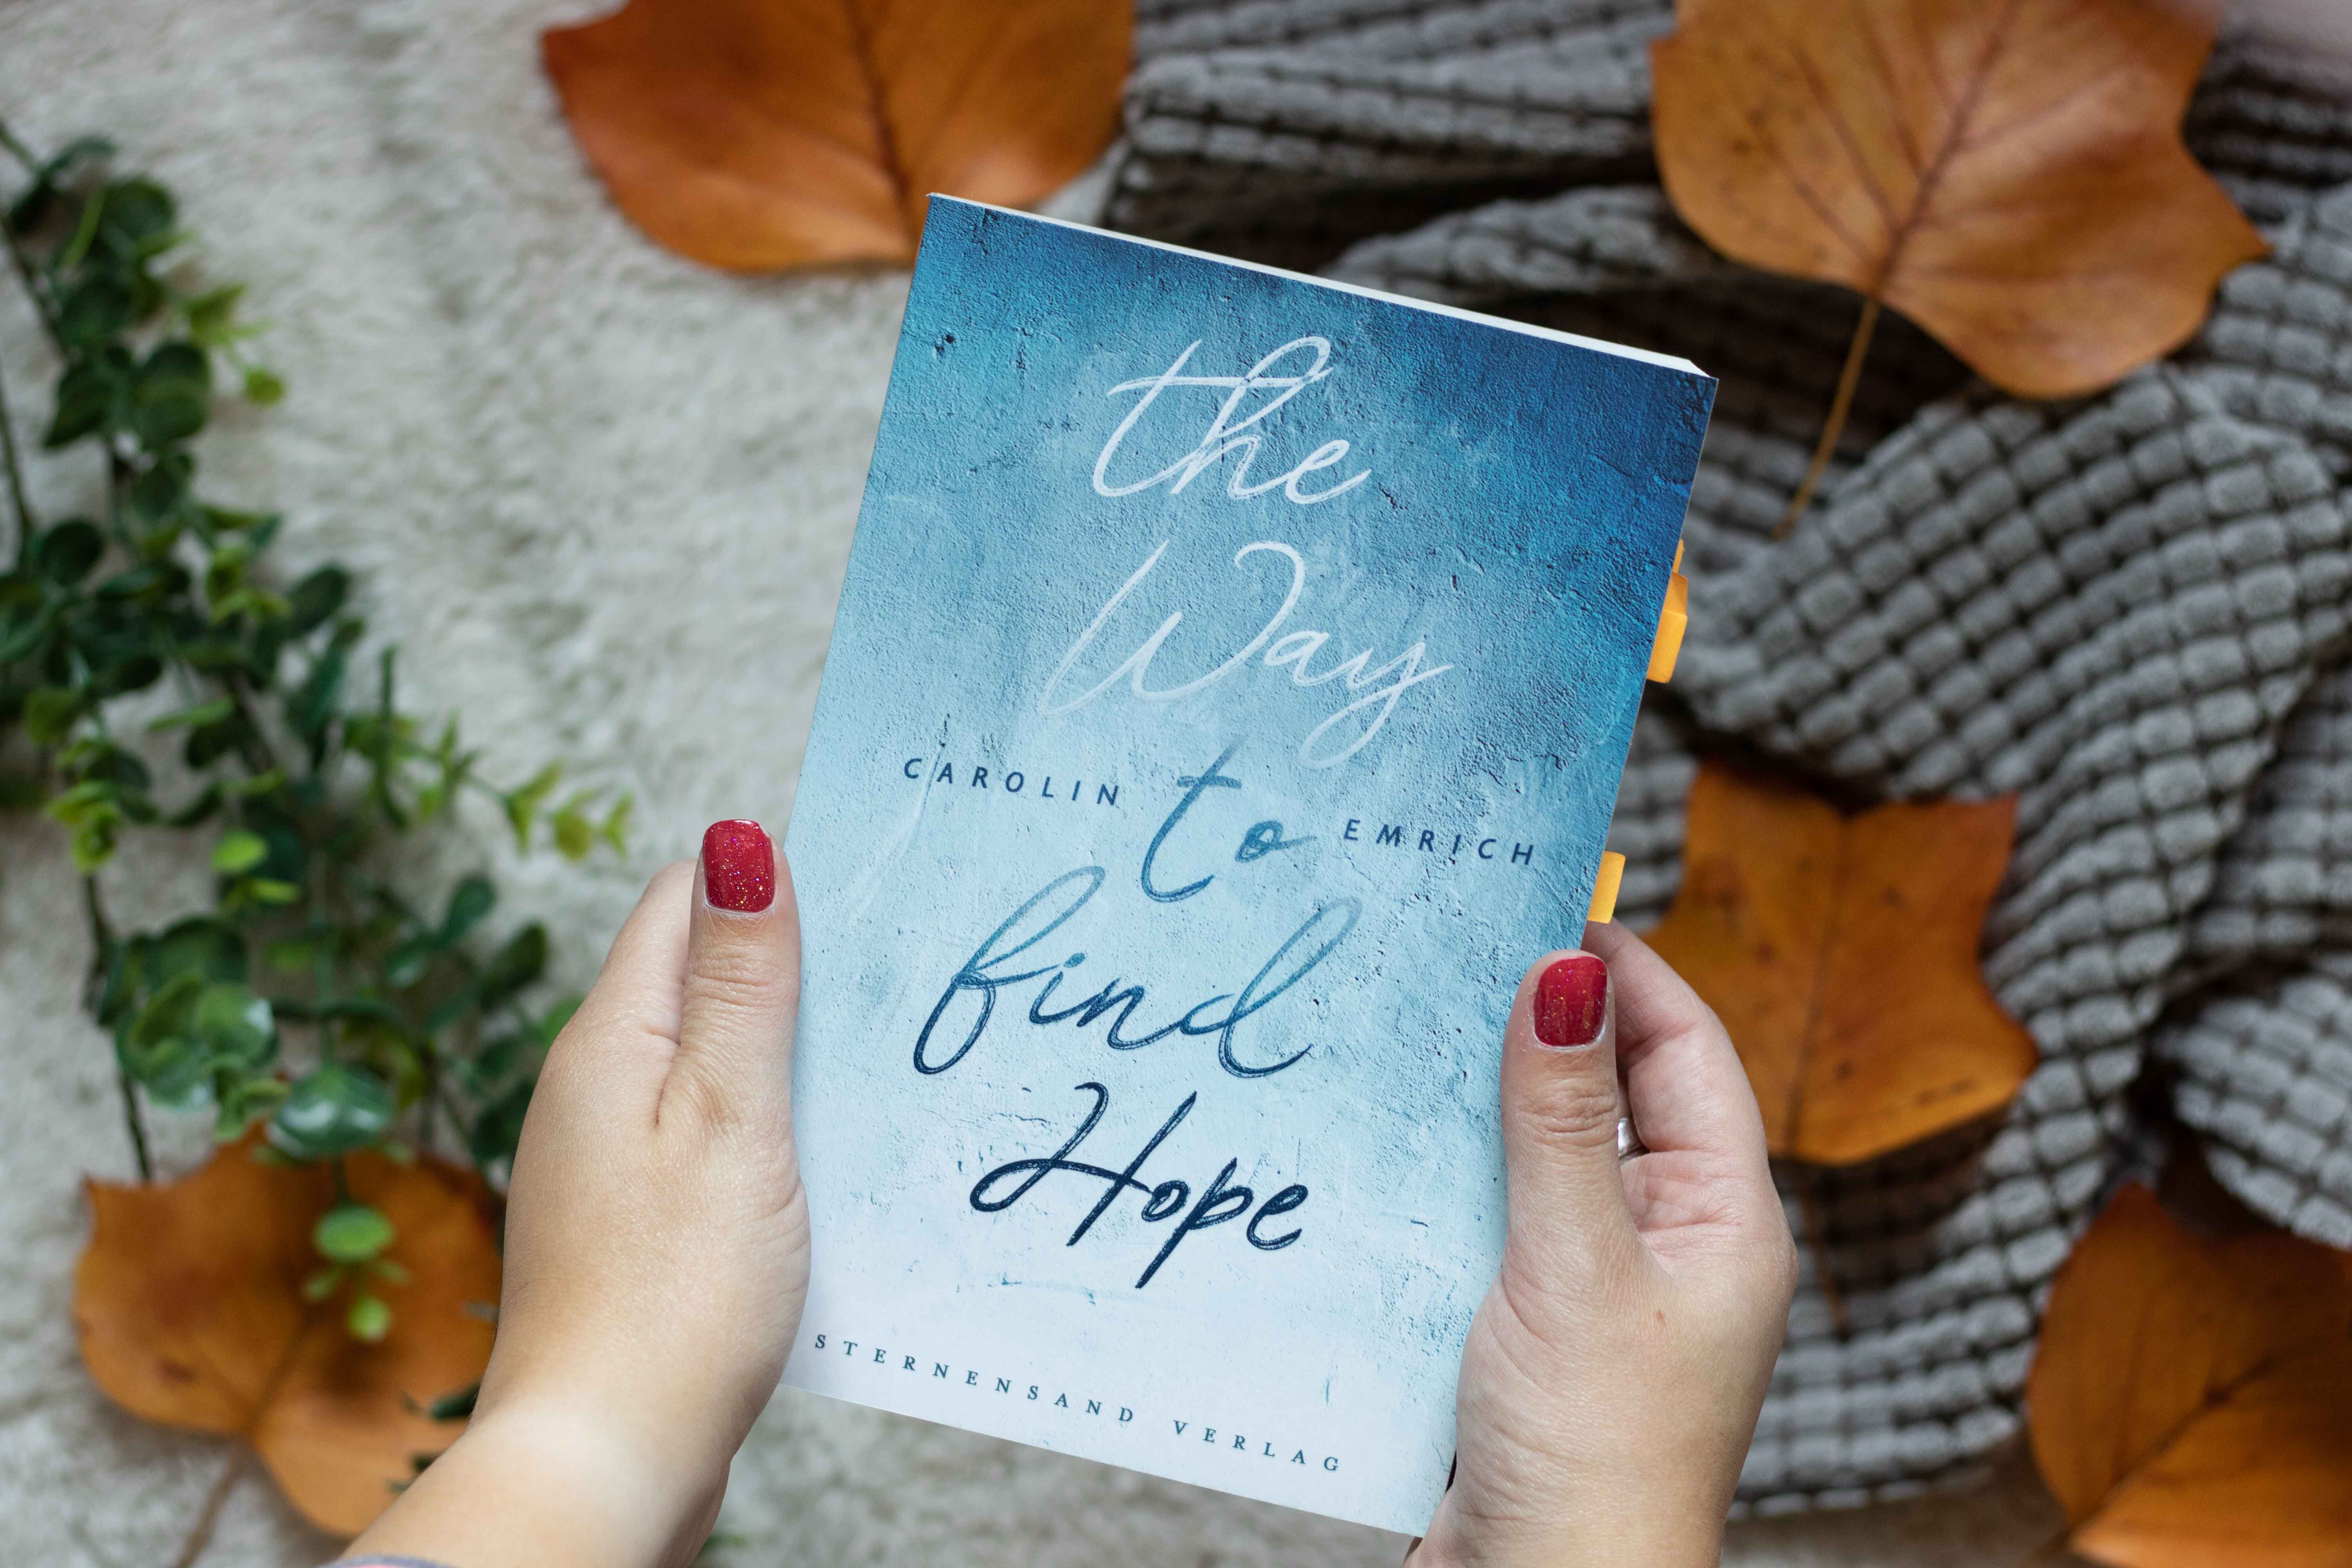 The way to find hope | Carolin Emmrich